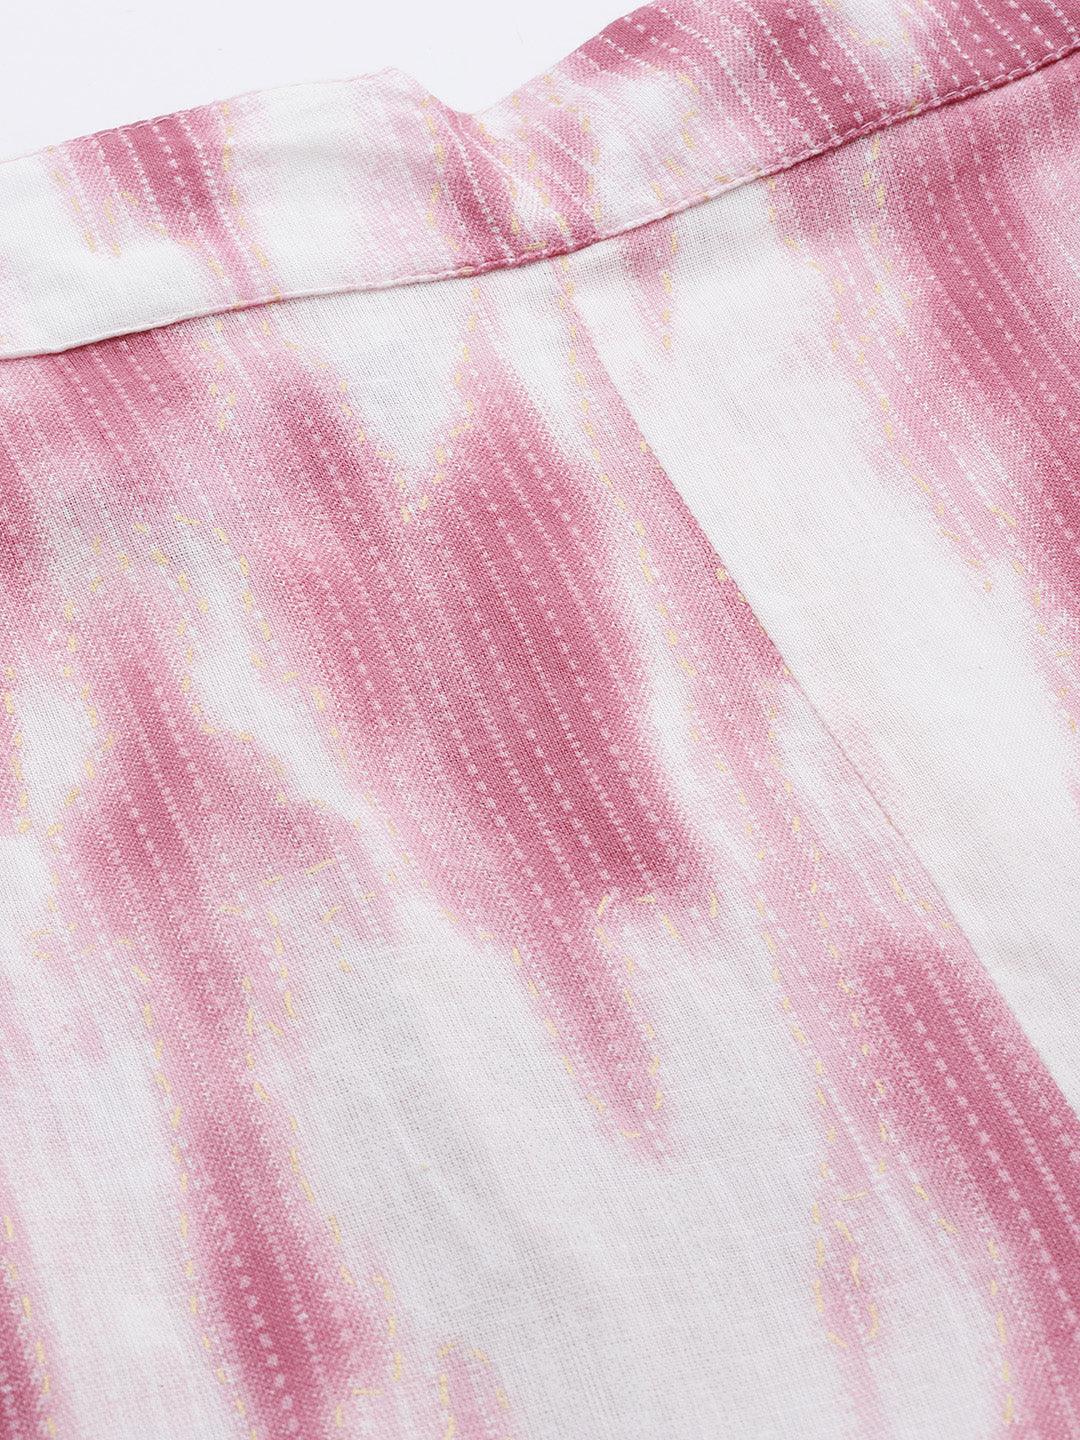 Pink Printed Cotton Night Suit